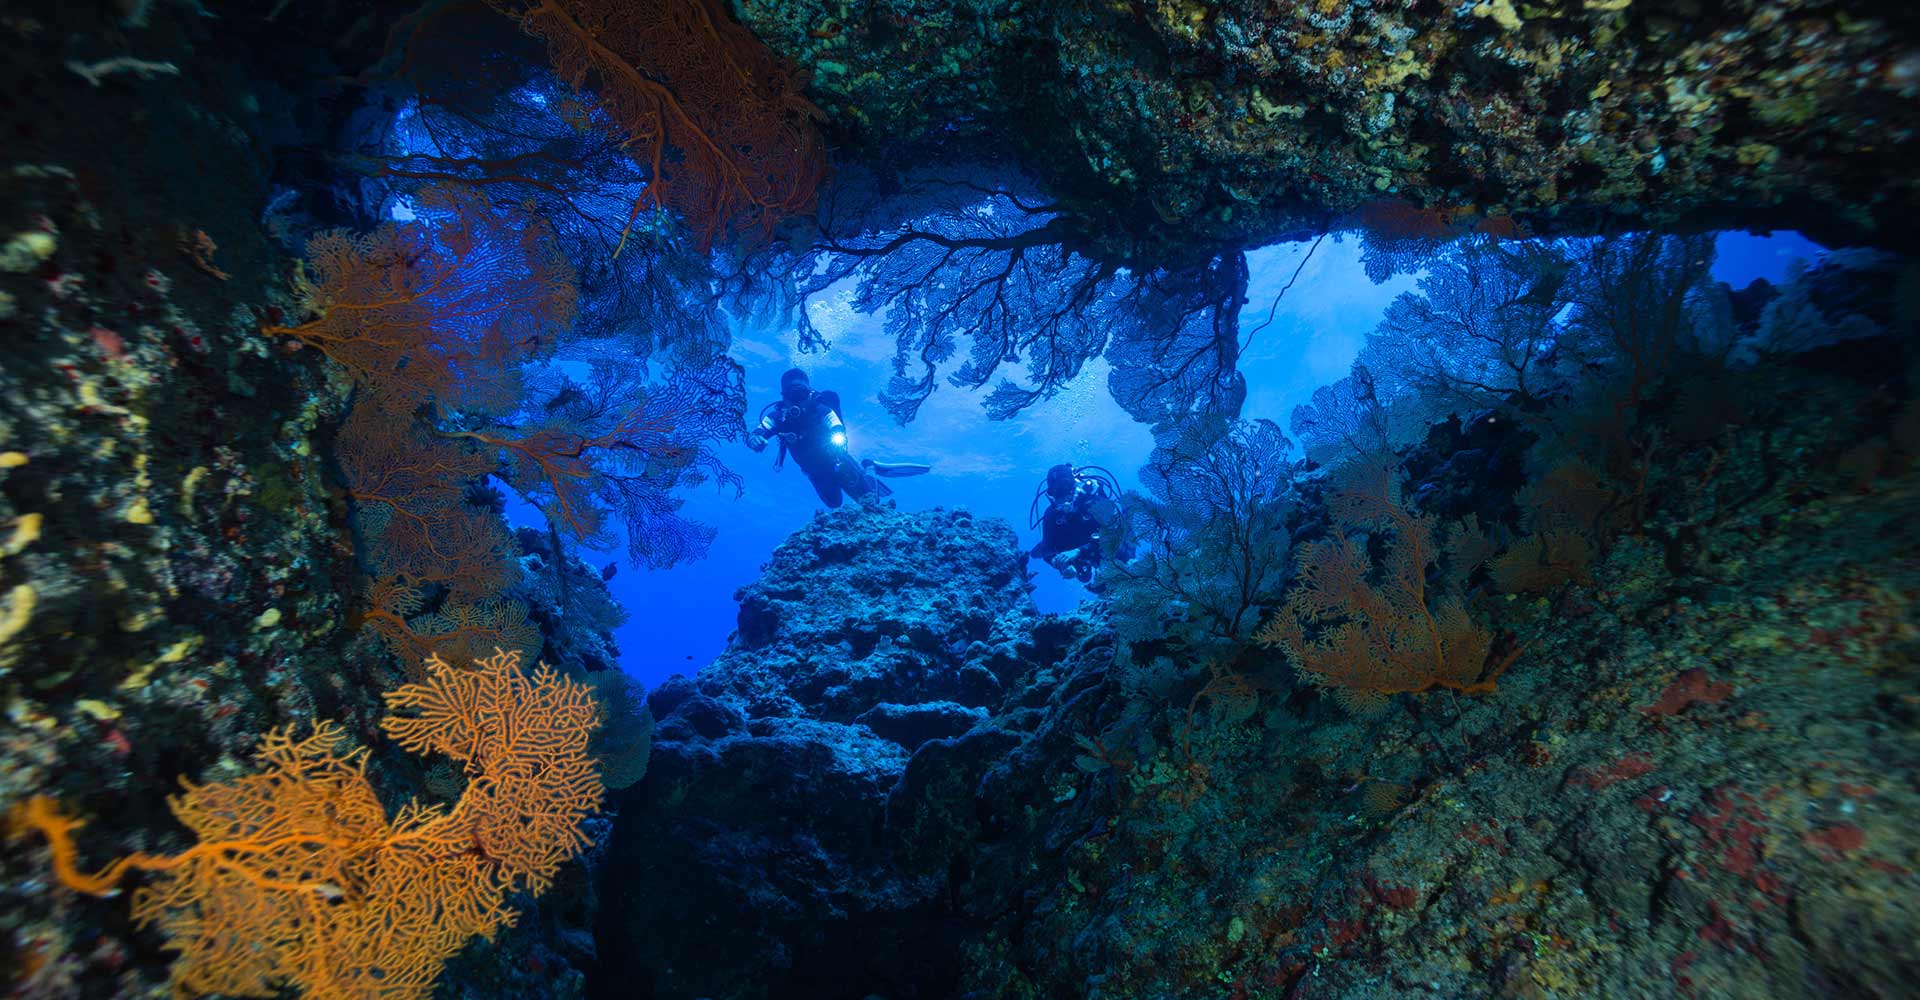 Scuba divers exploring the exotic marine life